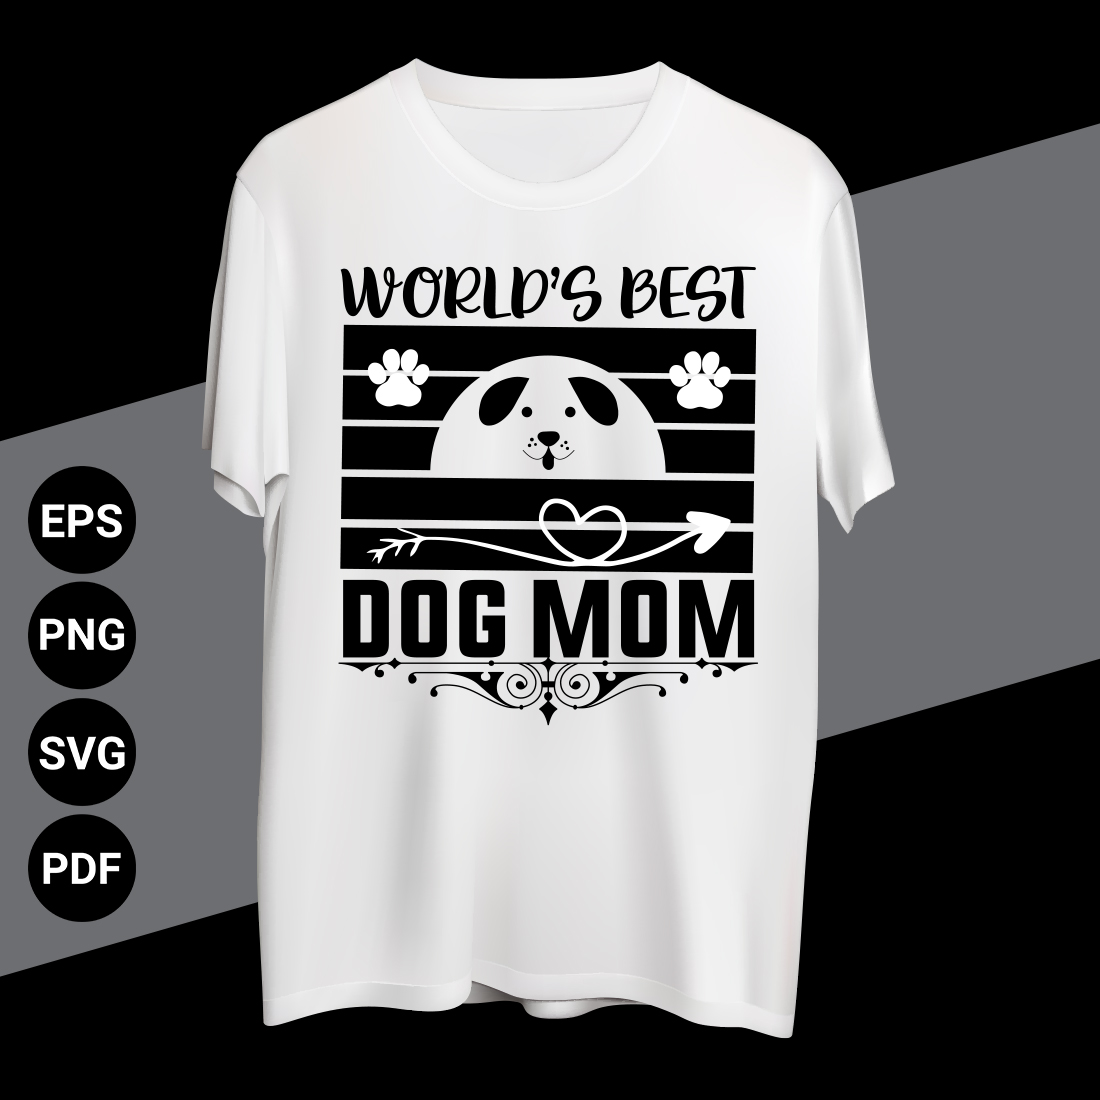 World’s Best Dog Mom T-shirt design cover image.